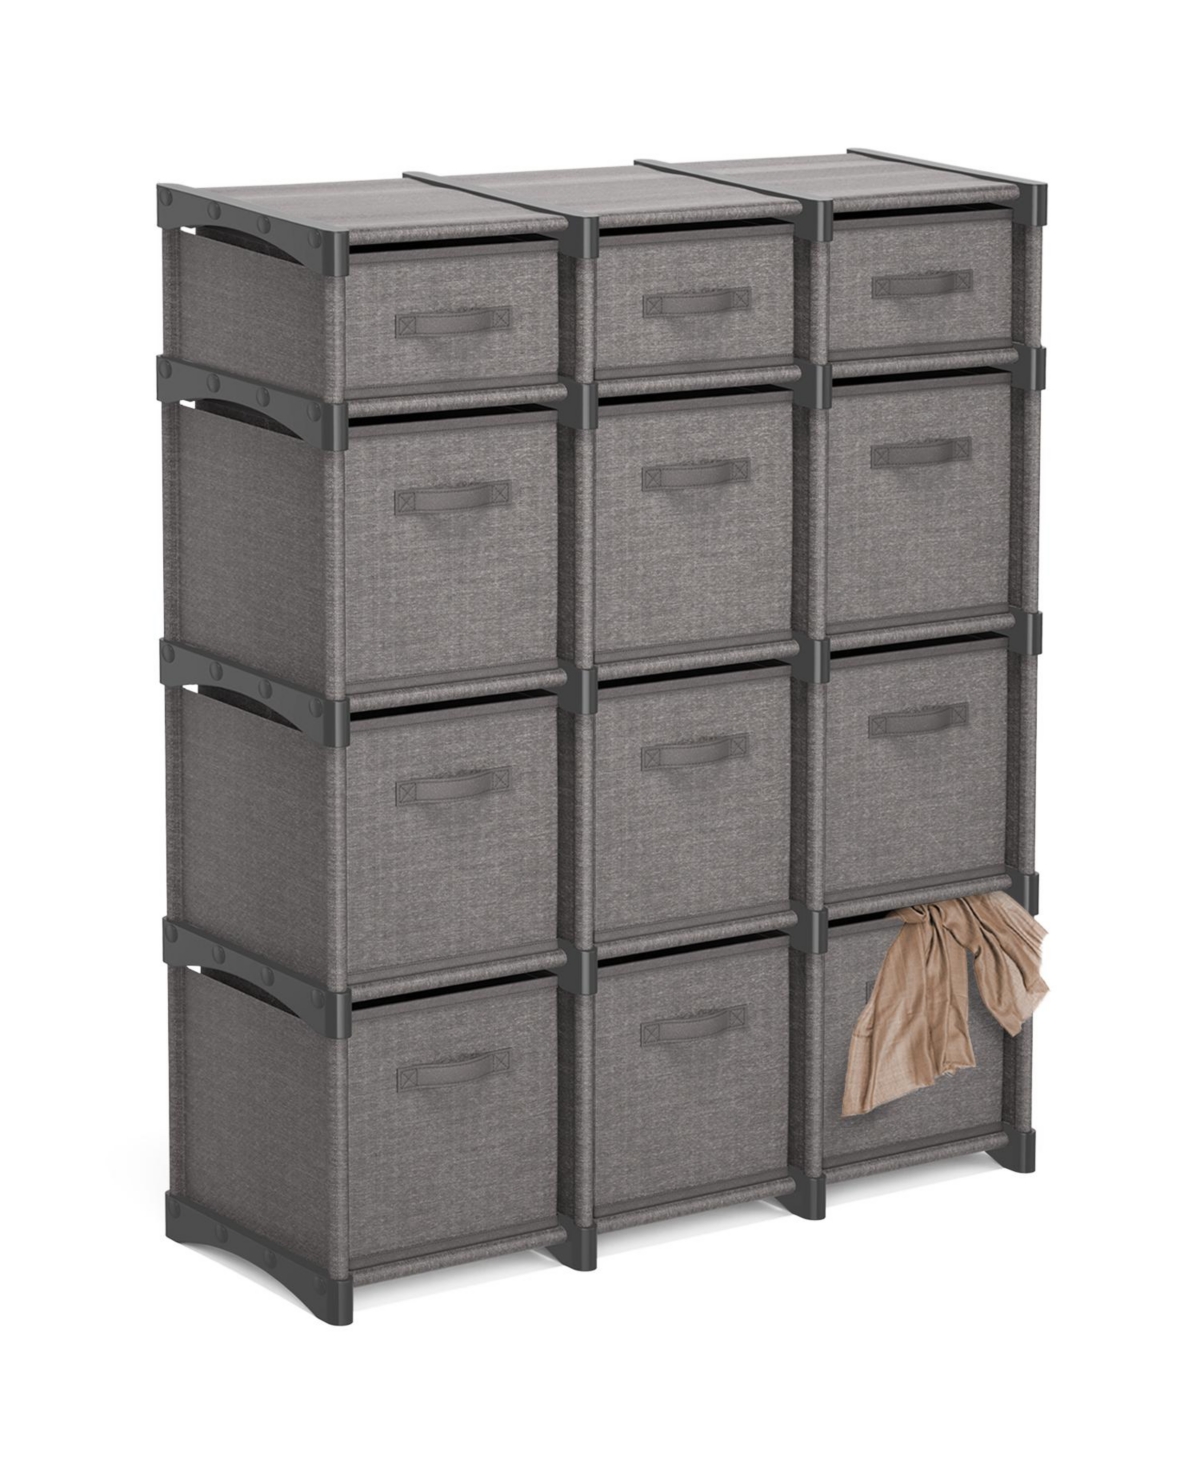 Heavy Duty 12 Cube Storage Organizer with Fabric Storage Bins - Black